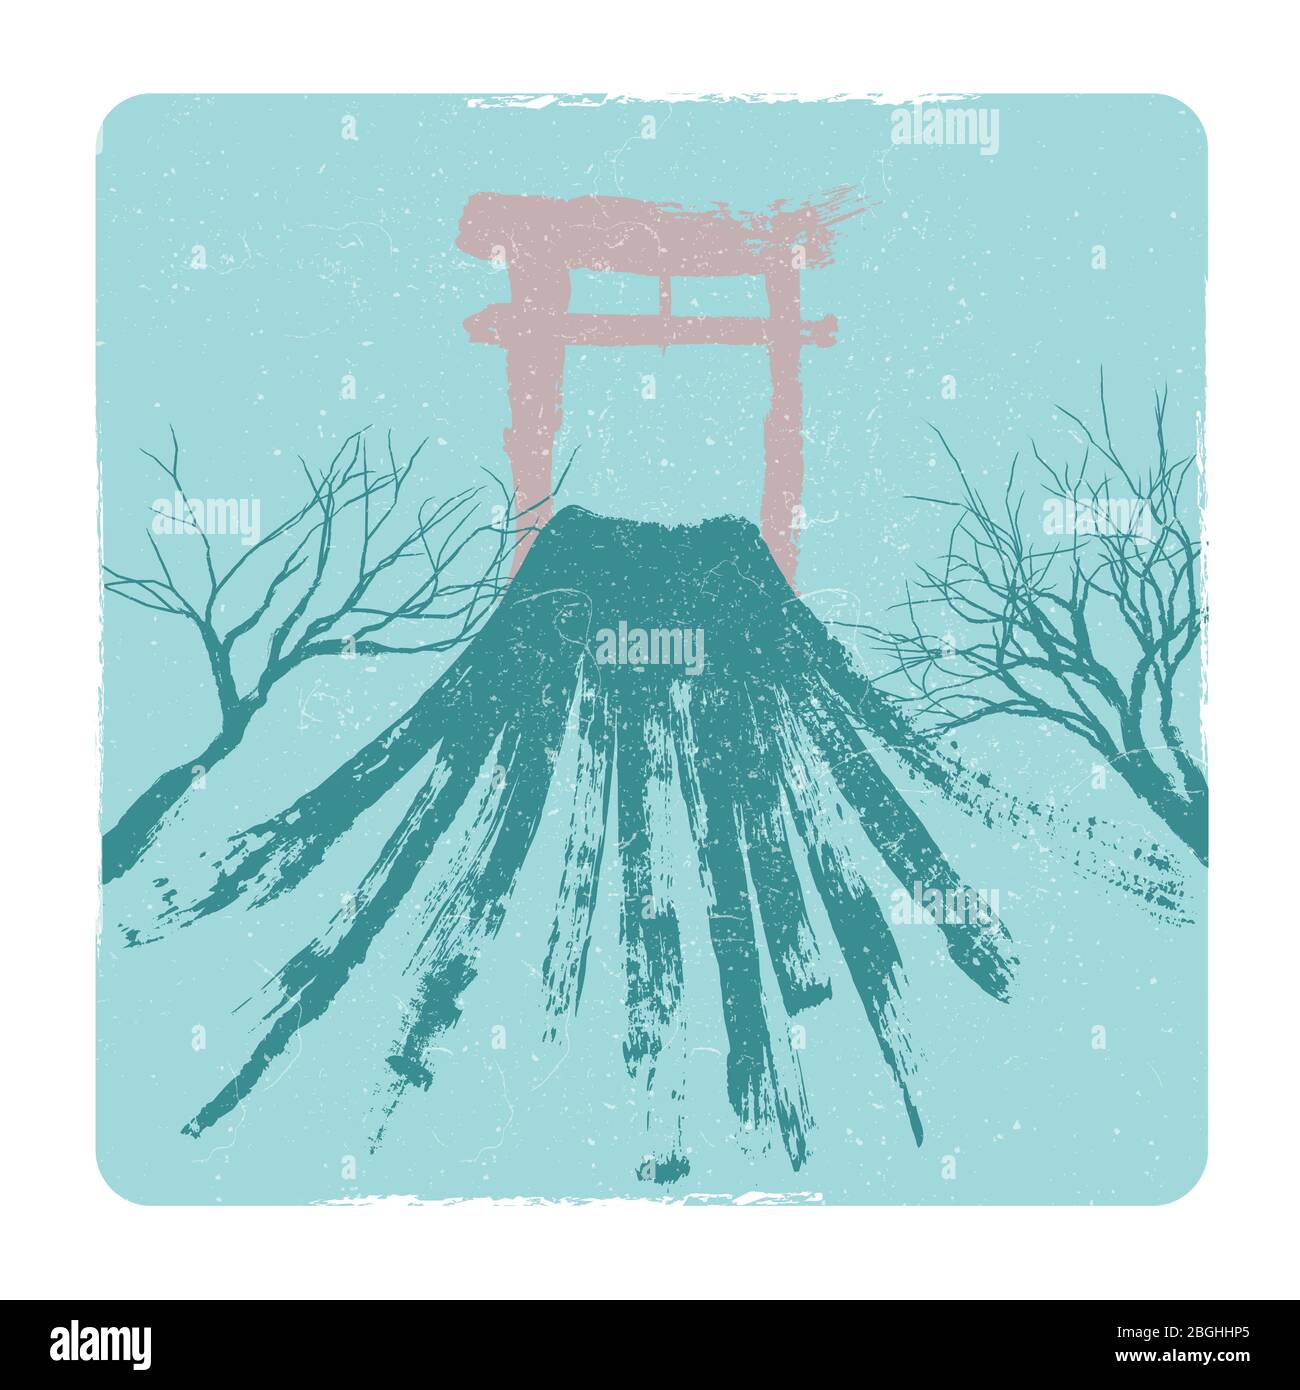 Grunge japanese illustration design. Vector volkano, pagoda and tree branches Stock Vector